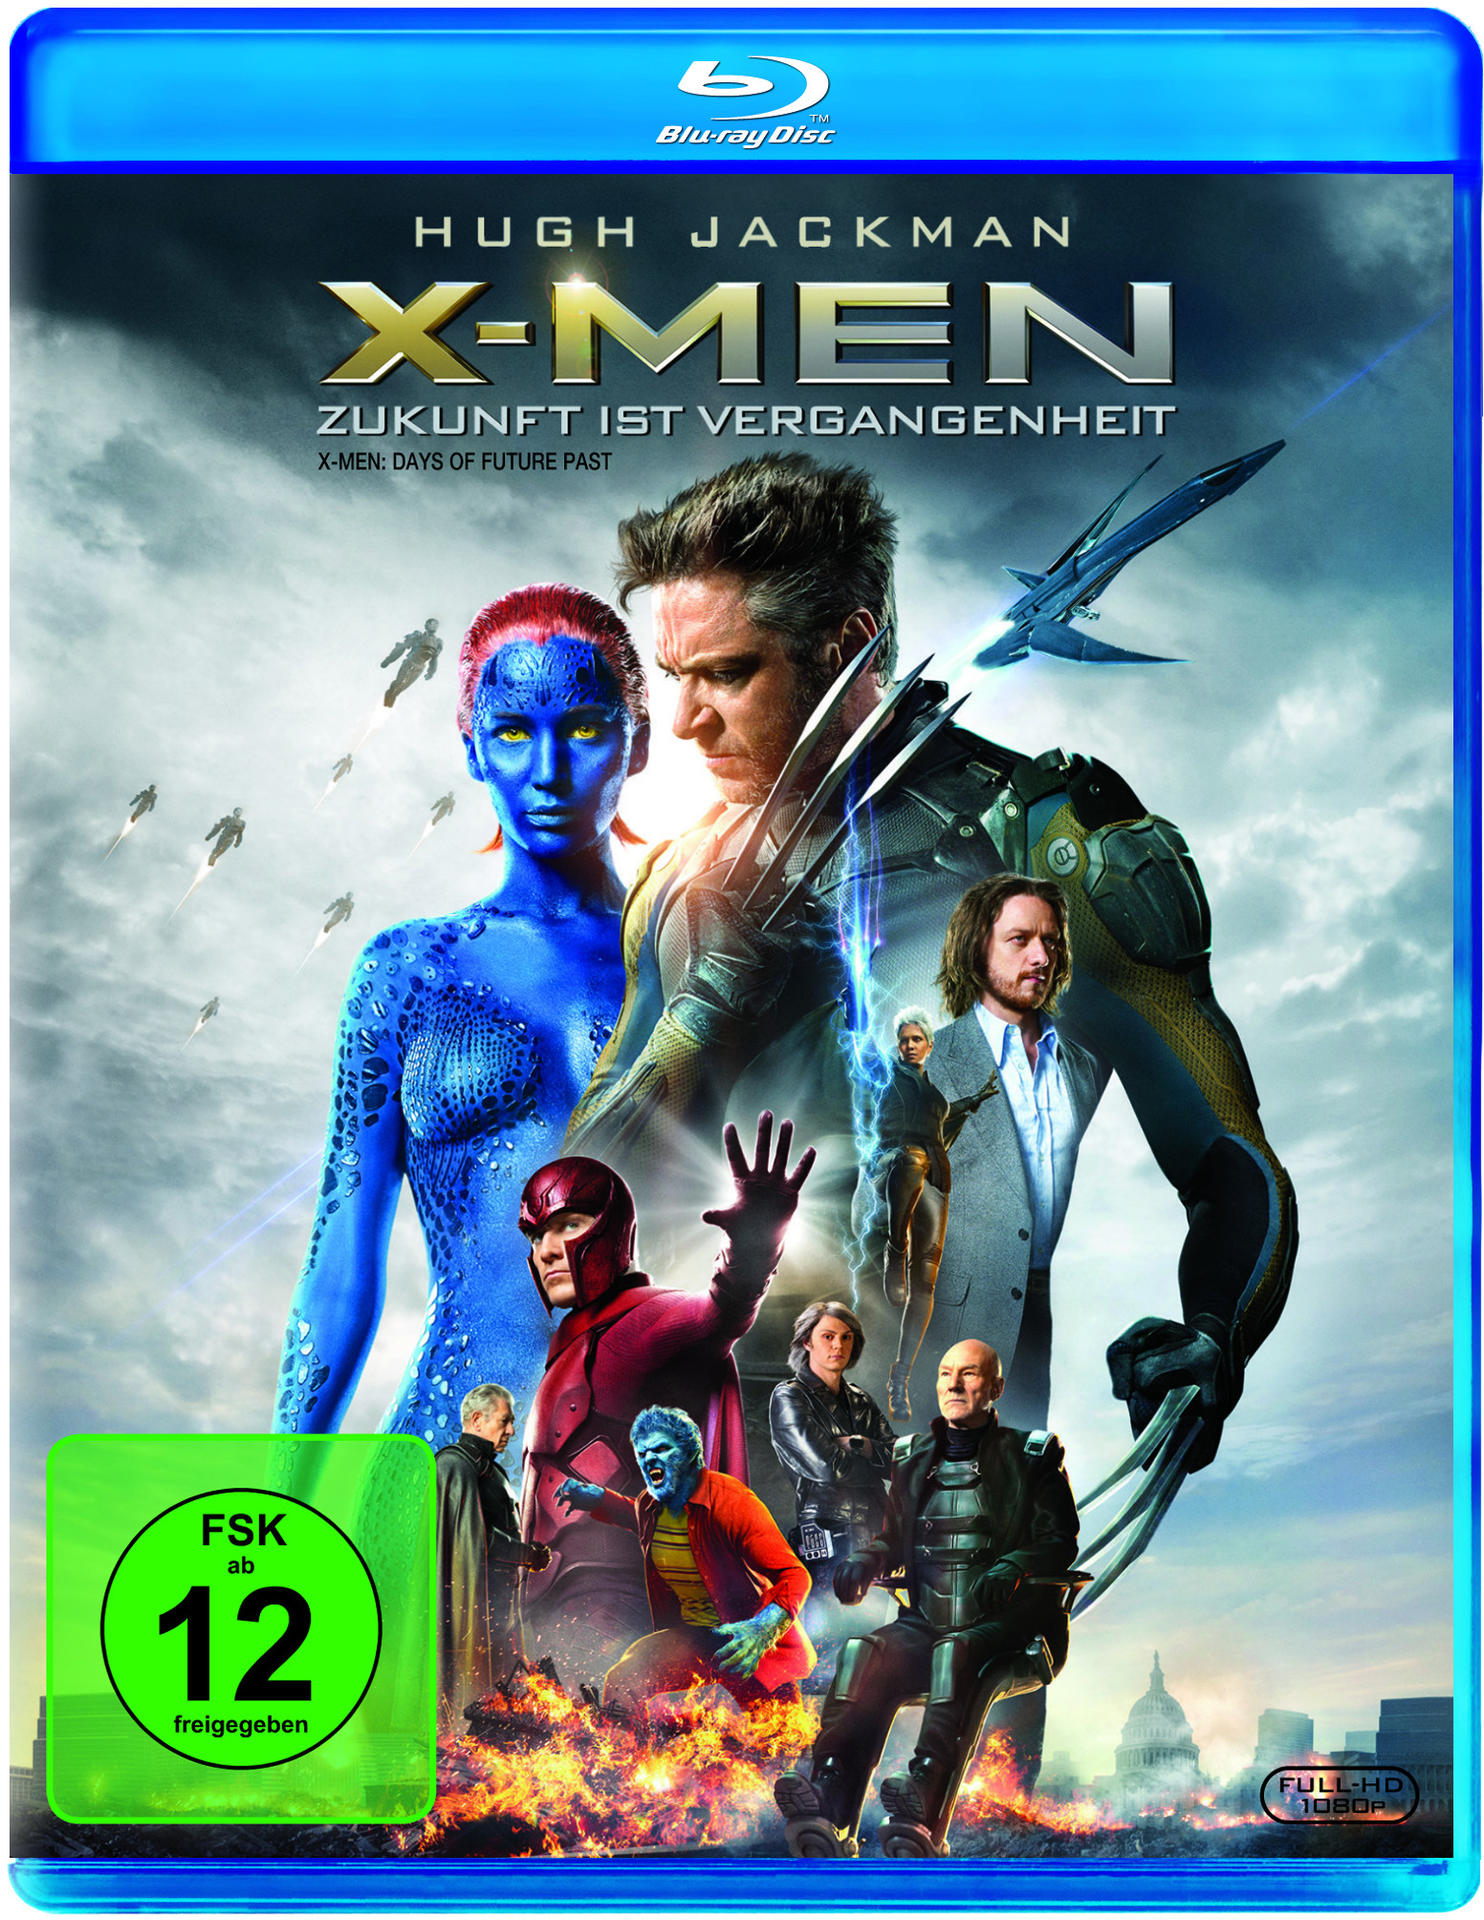 Vergangenheit Zukunft Blu-ray - ist X-Men